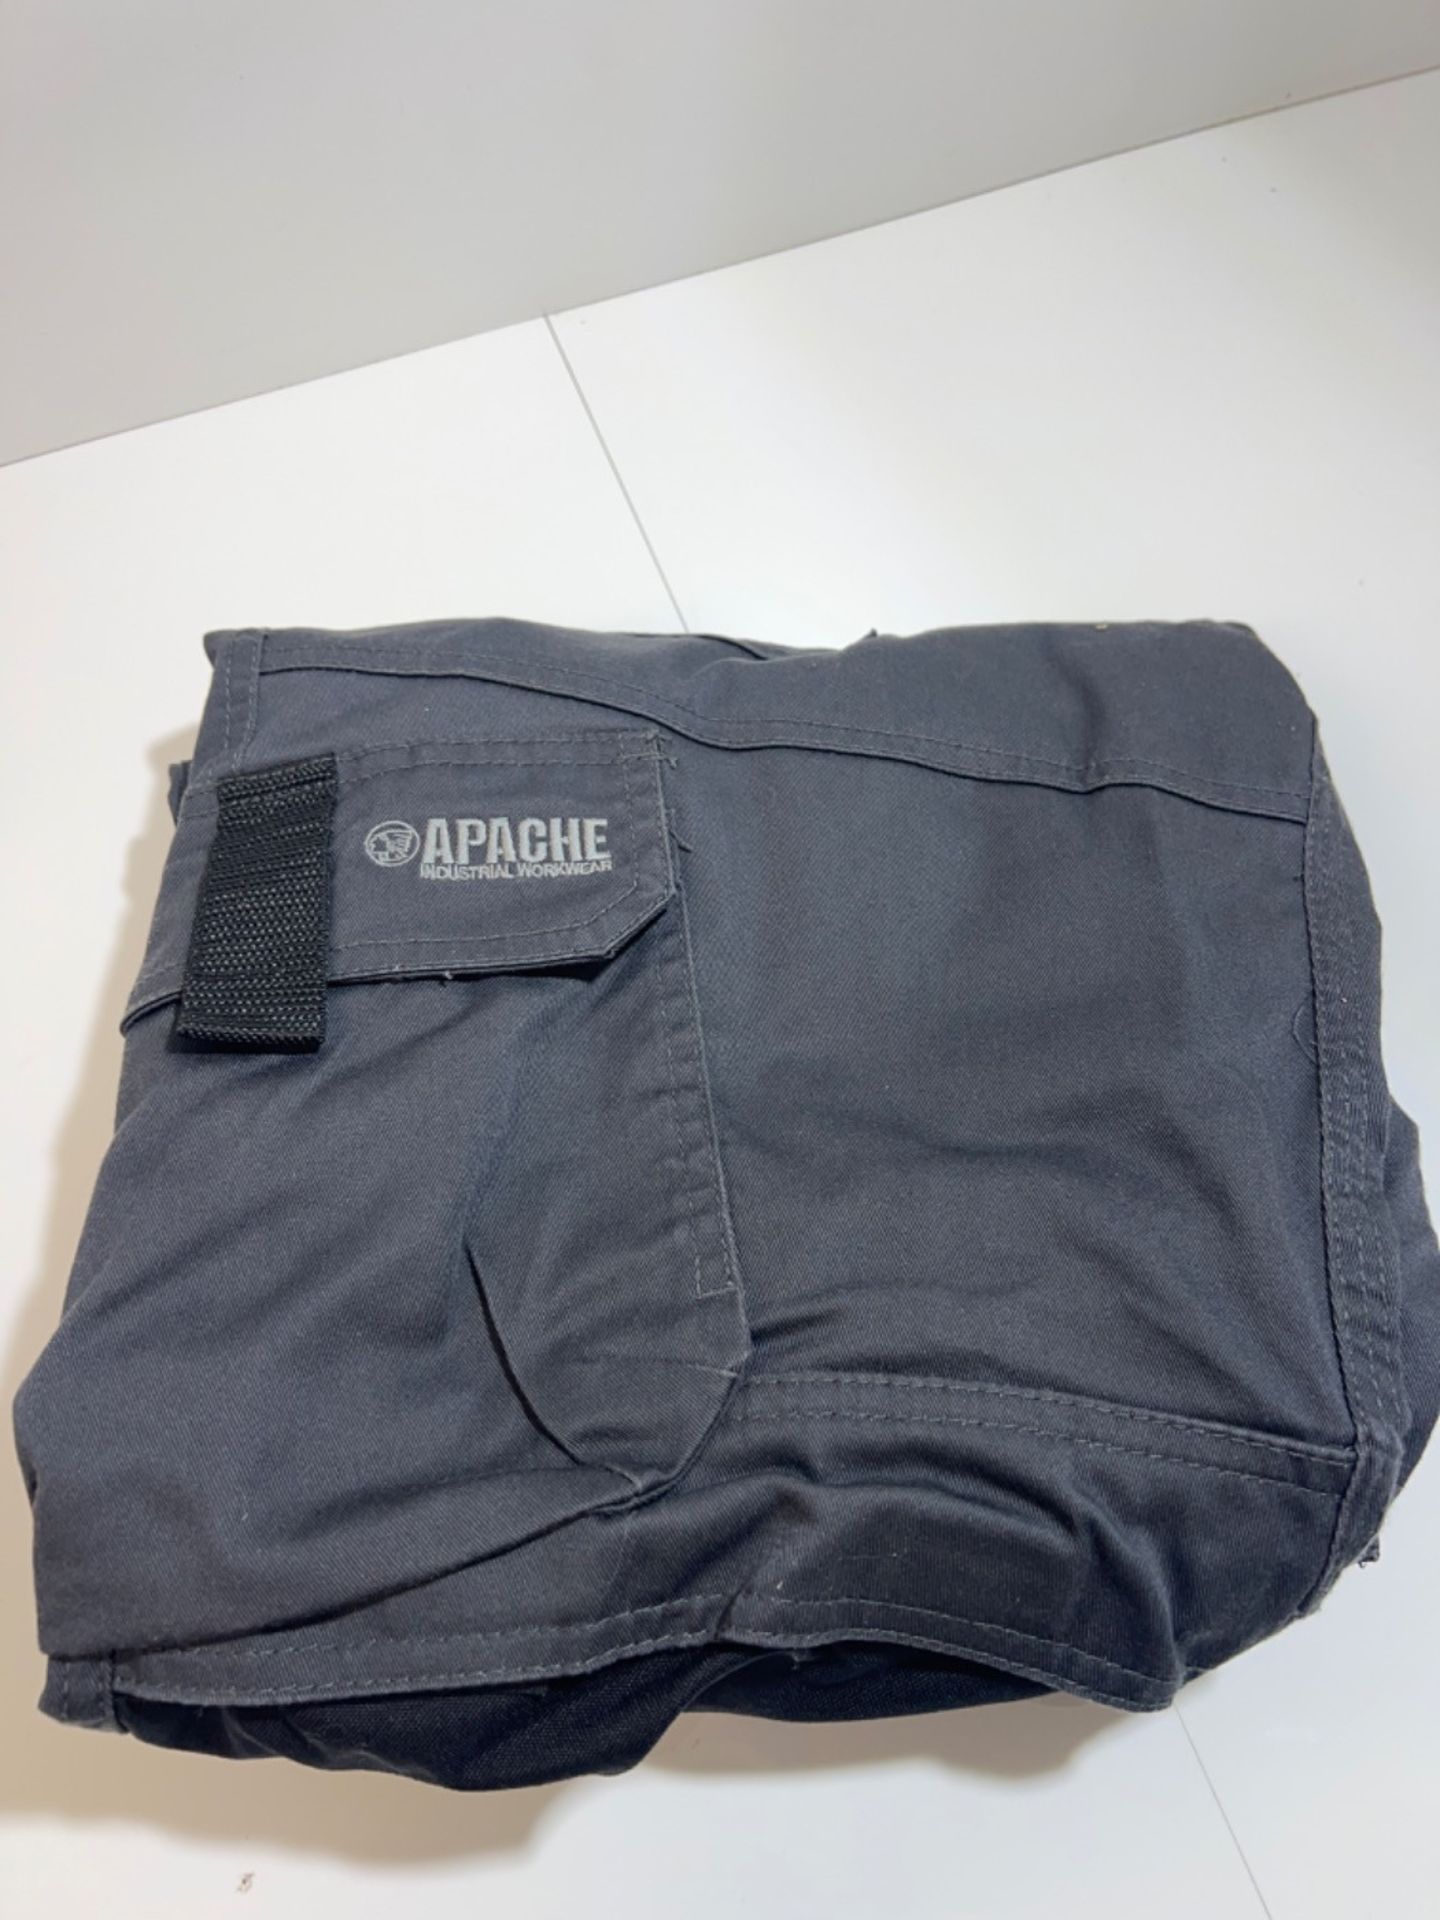 Apache Workwear Men's Site Trouser ATS 3D Stretch Holster Trouser Grey/Black 36W x 31L Cordura Side - Image 3 of 3